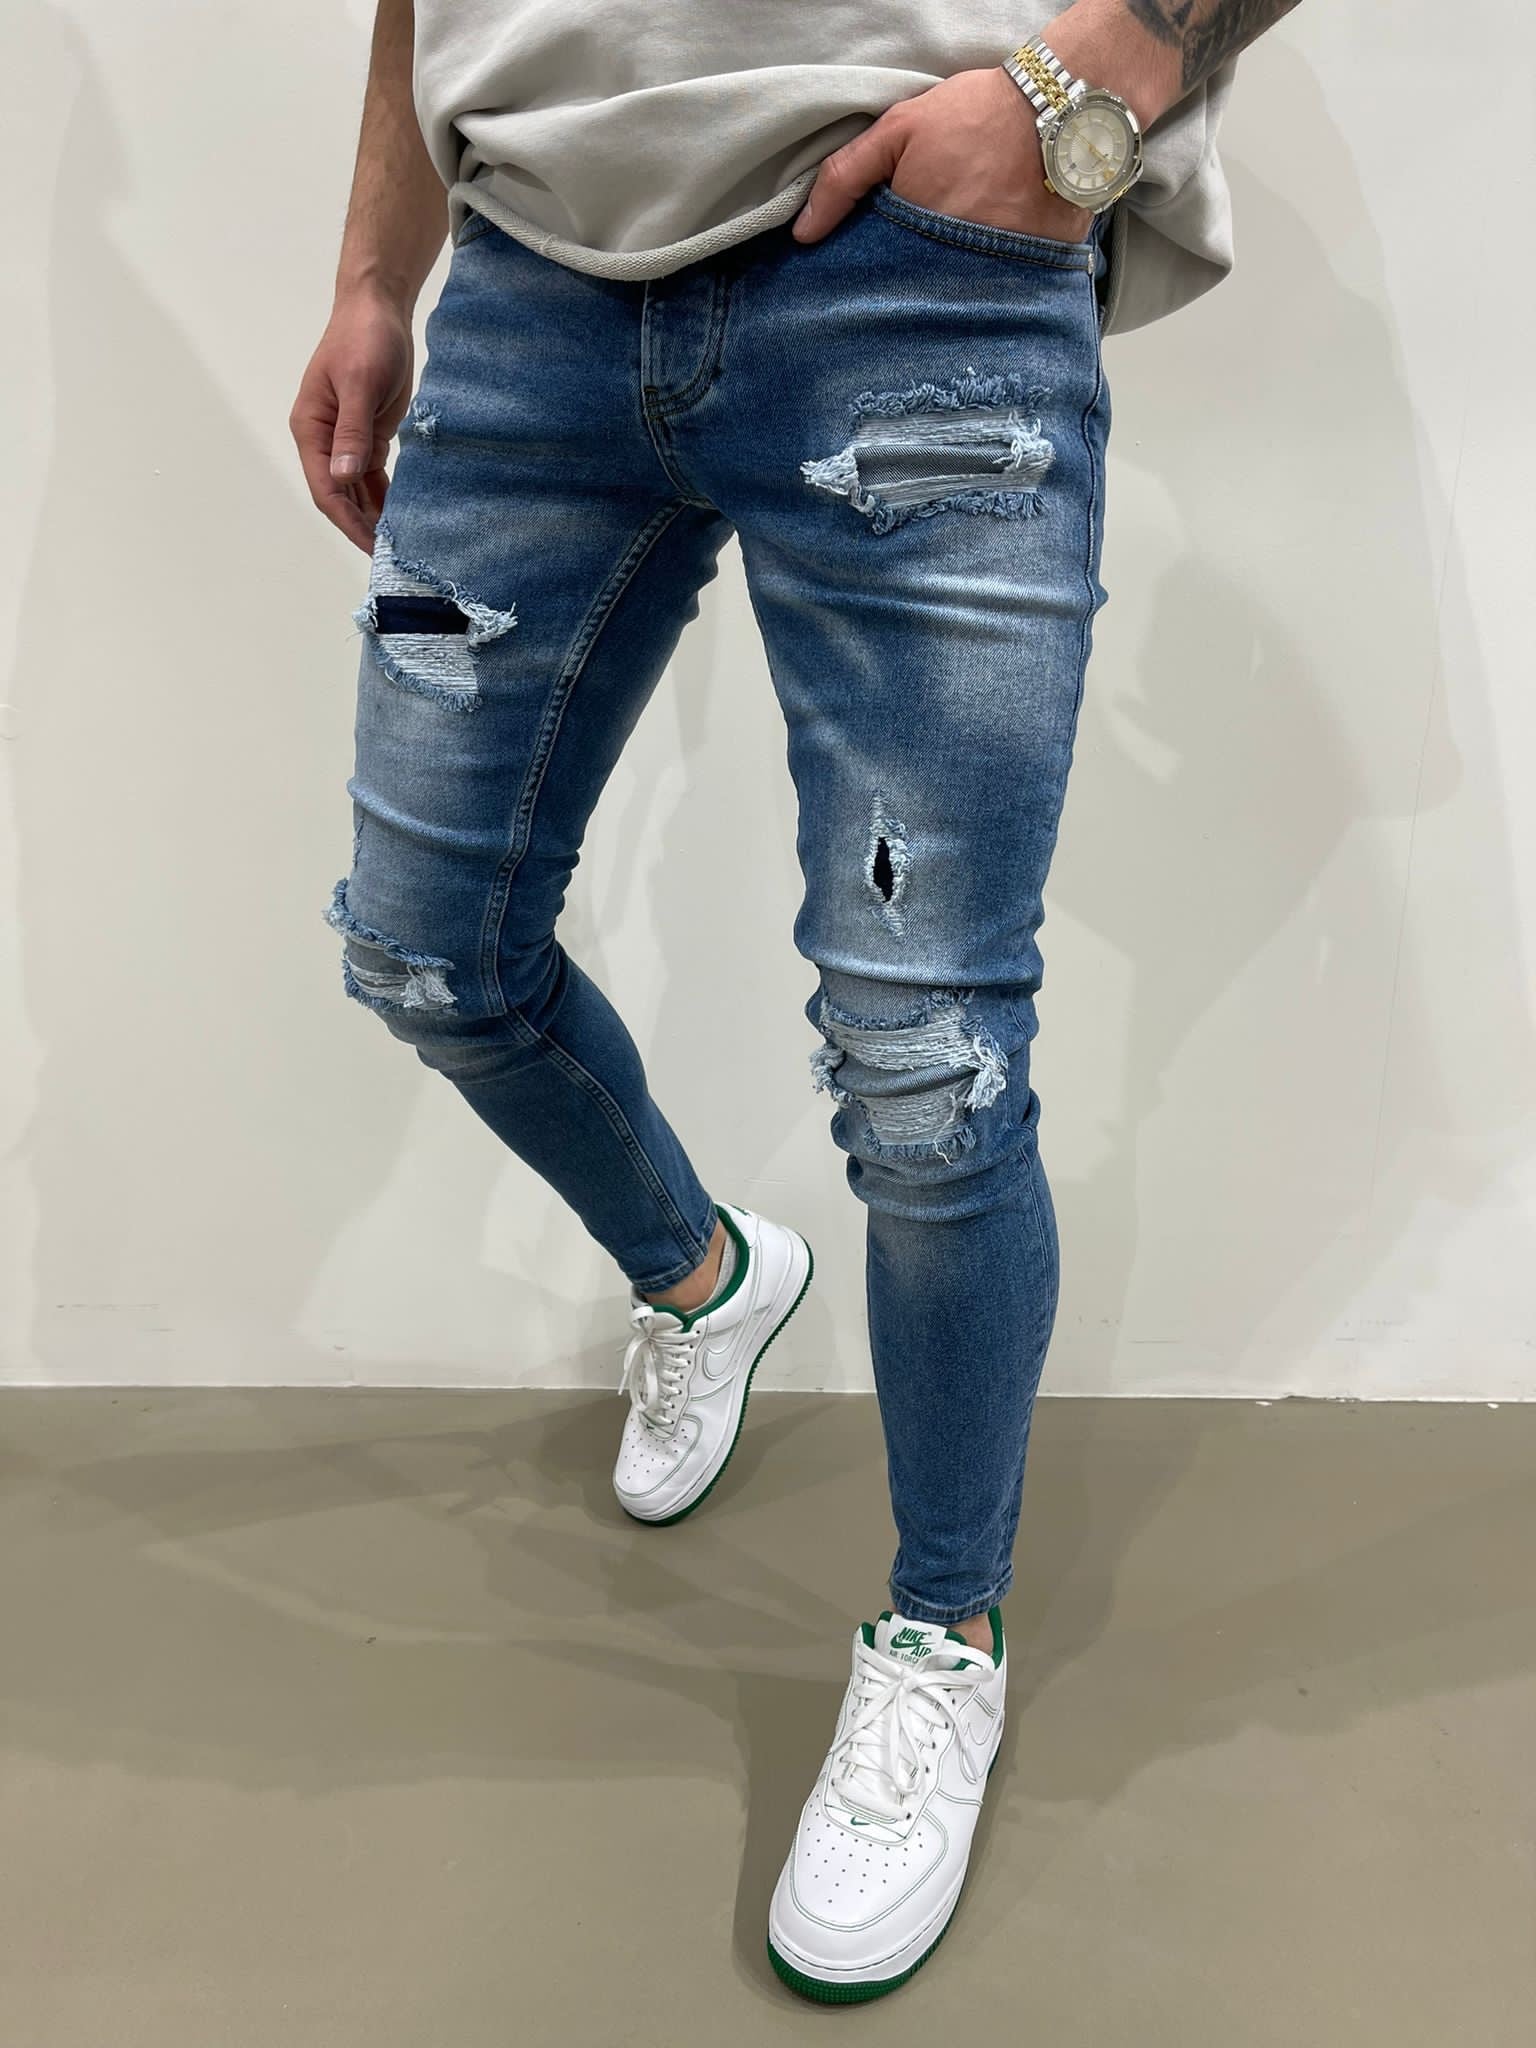 Kenzarro - Jeans homme fashion